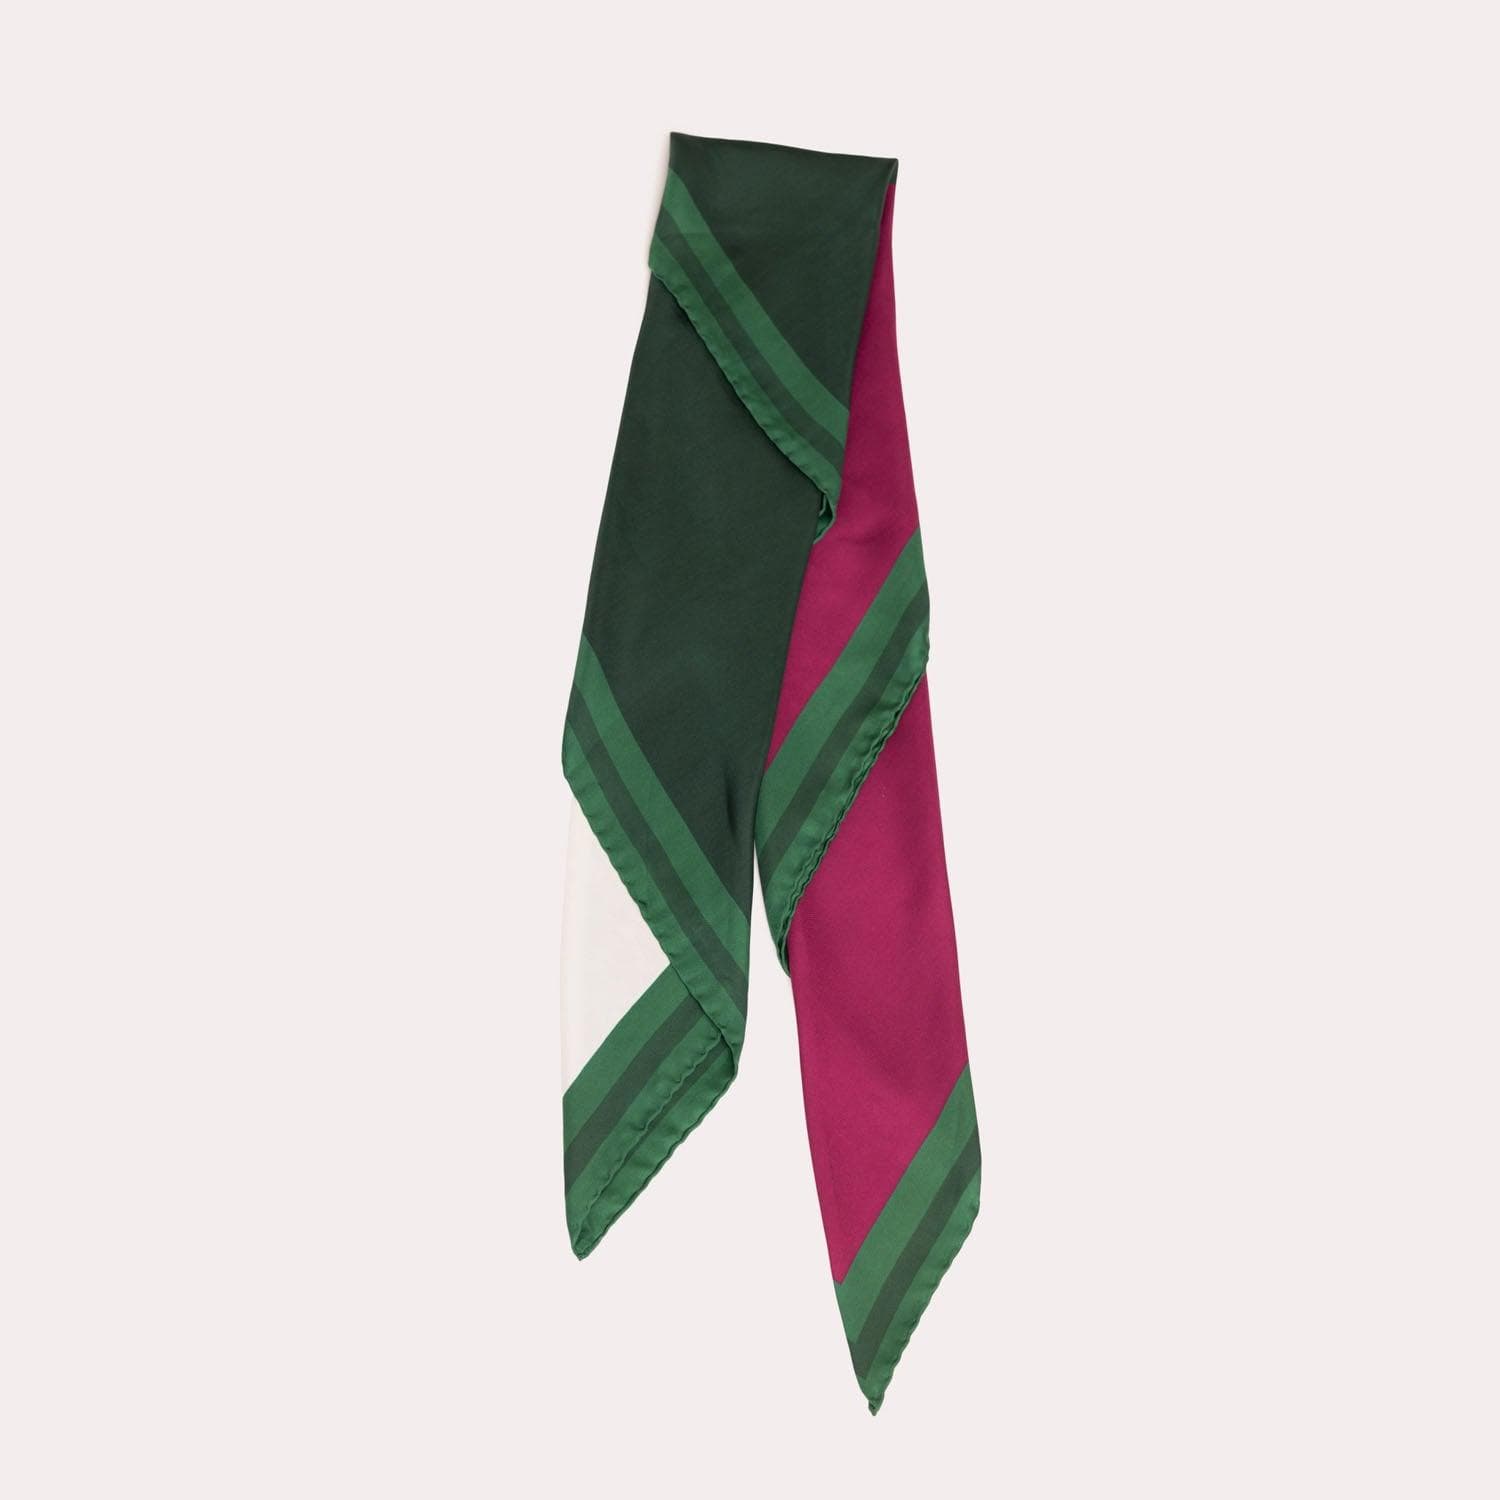 100% Silk scarf. Watermelon scarf by Seymoure Gloves.